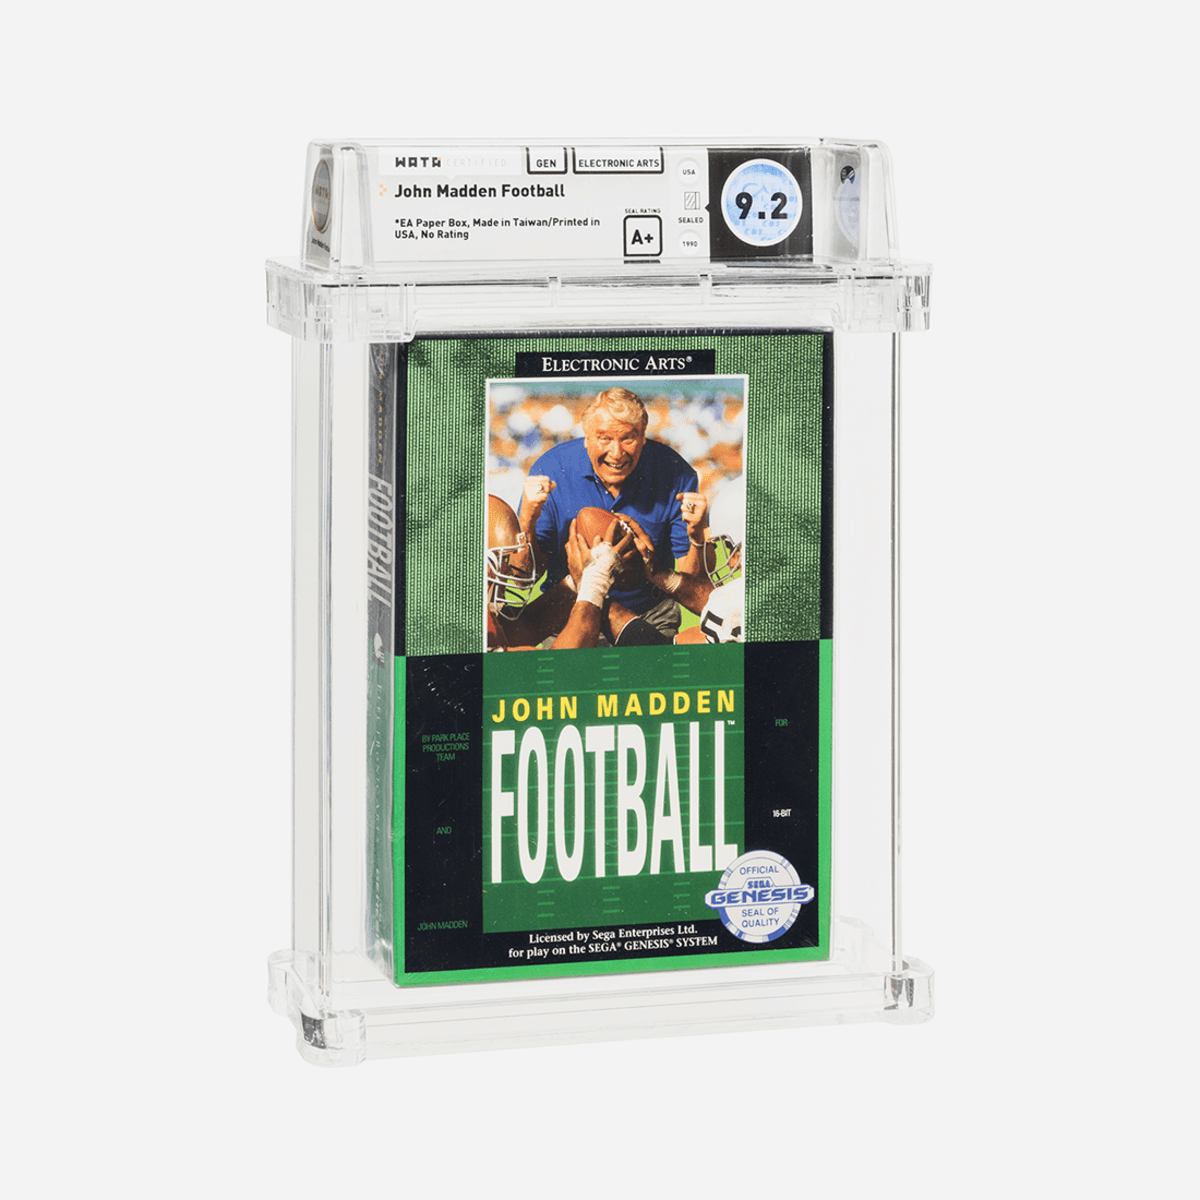 1990 Madden football video game